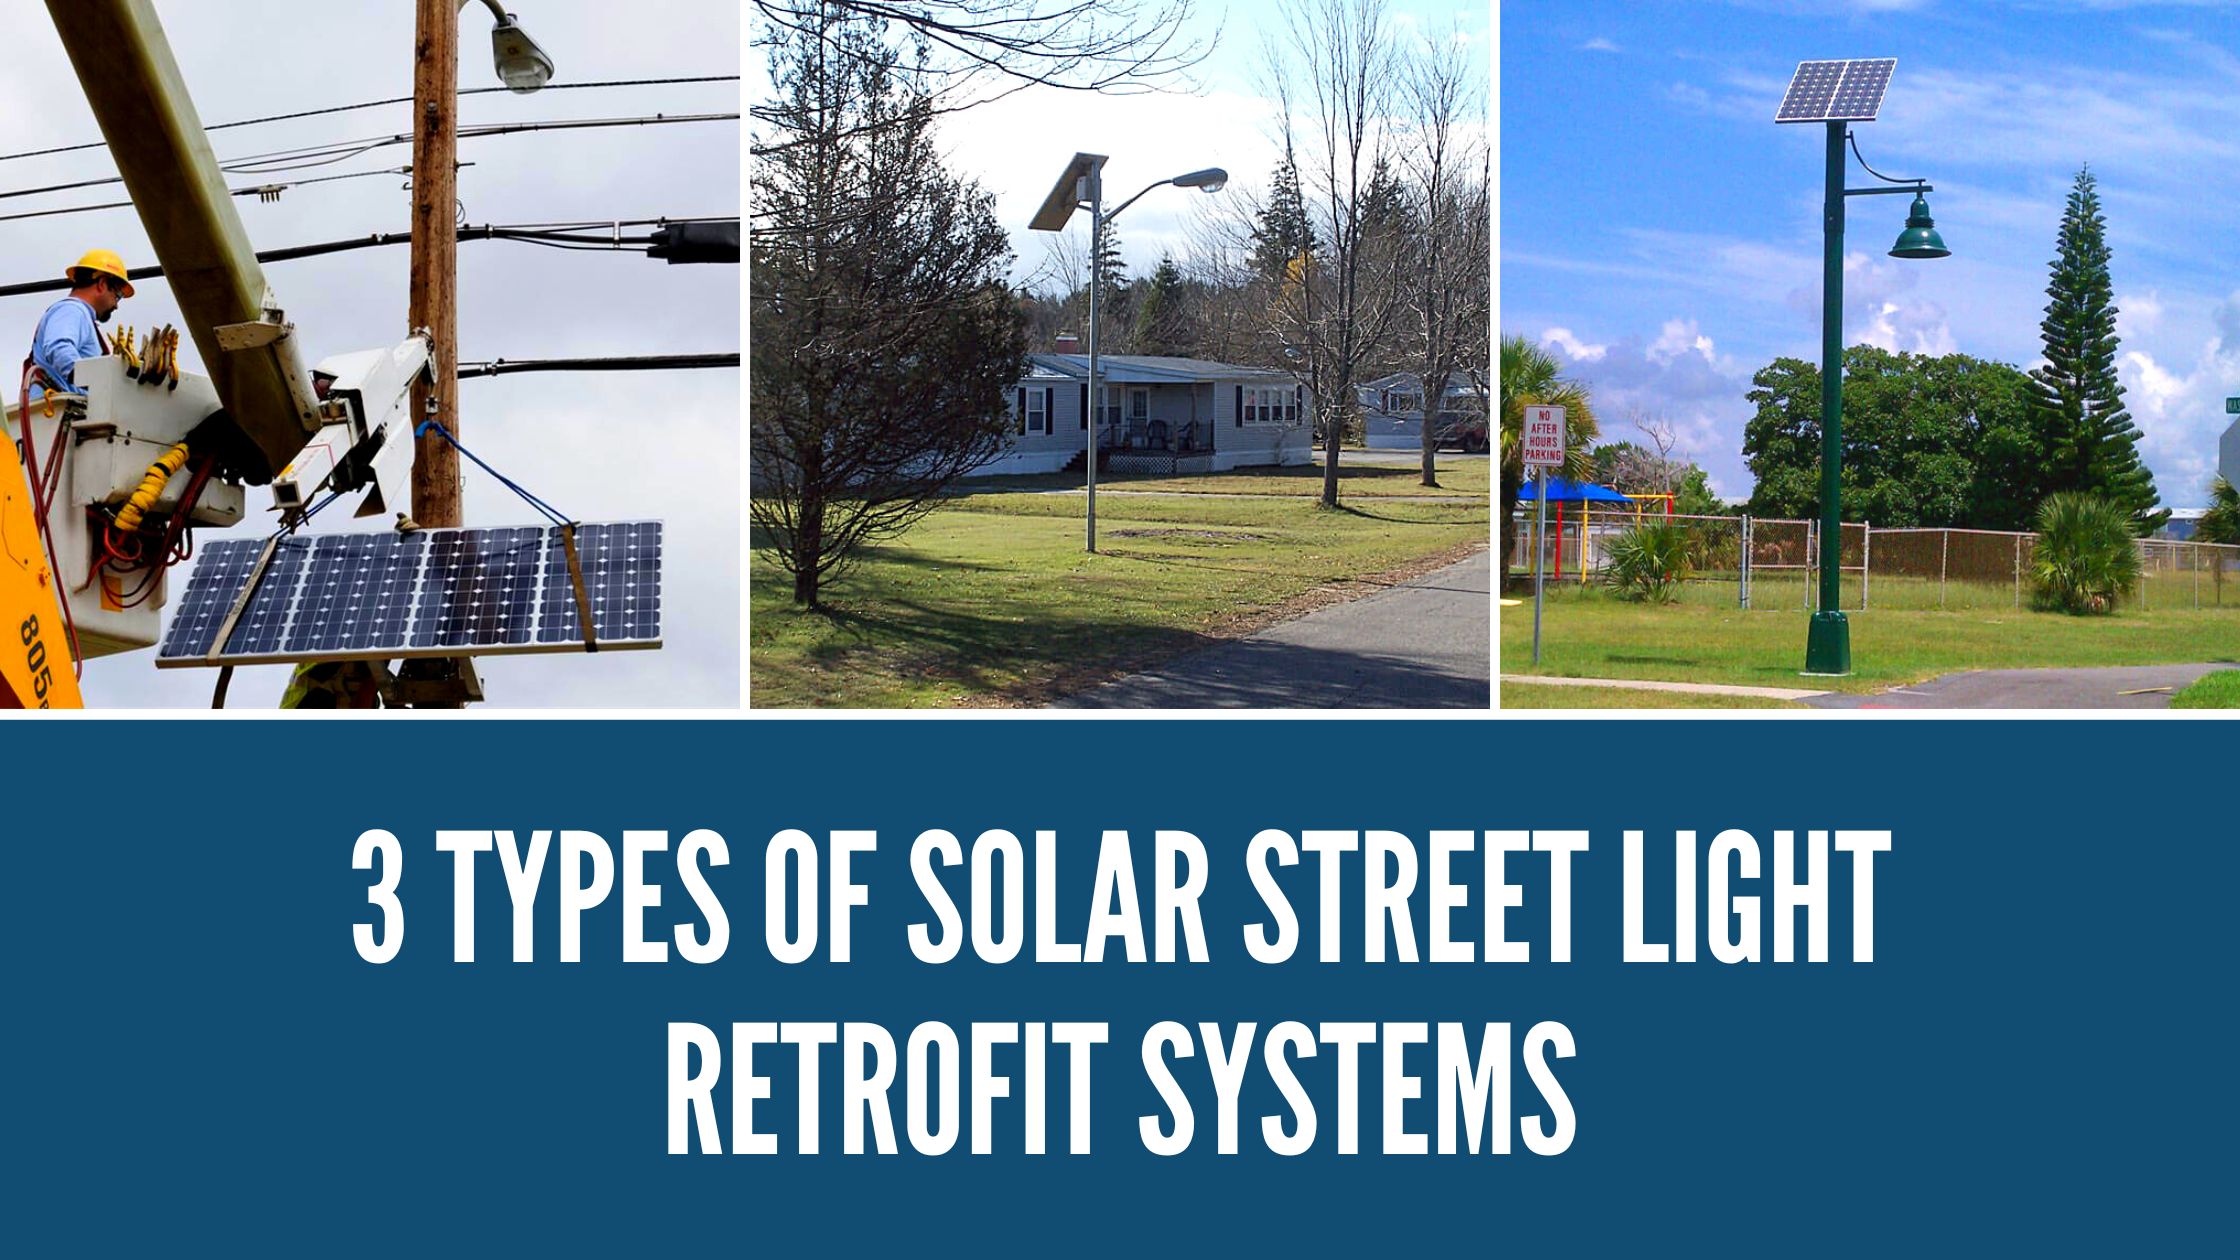 3 Types of Solar Street Light Retrofit Systems